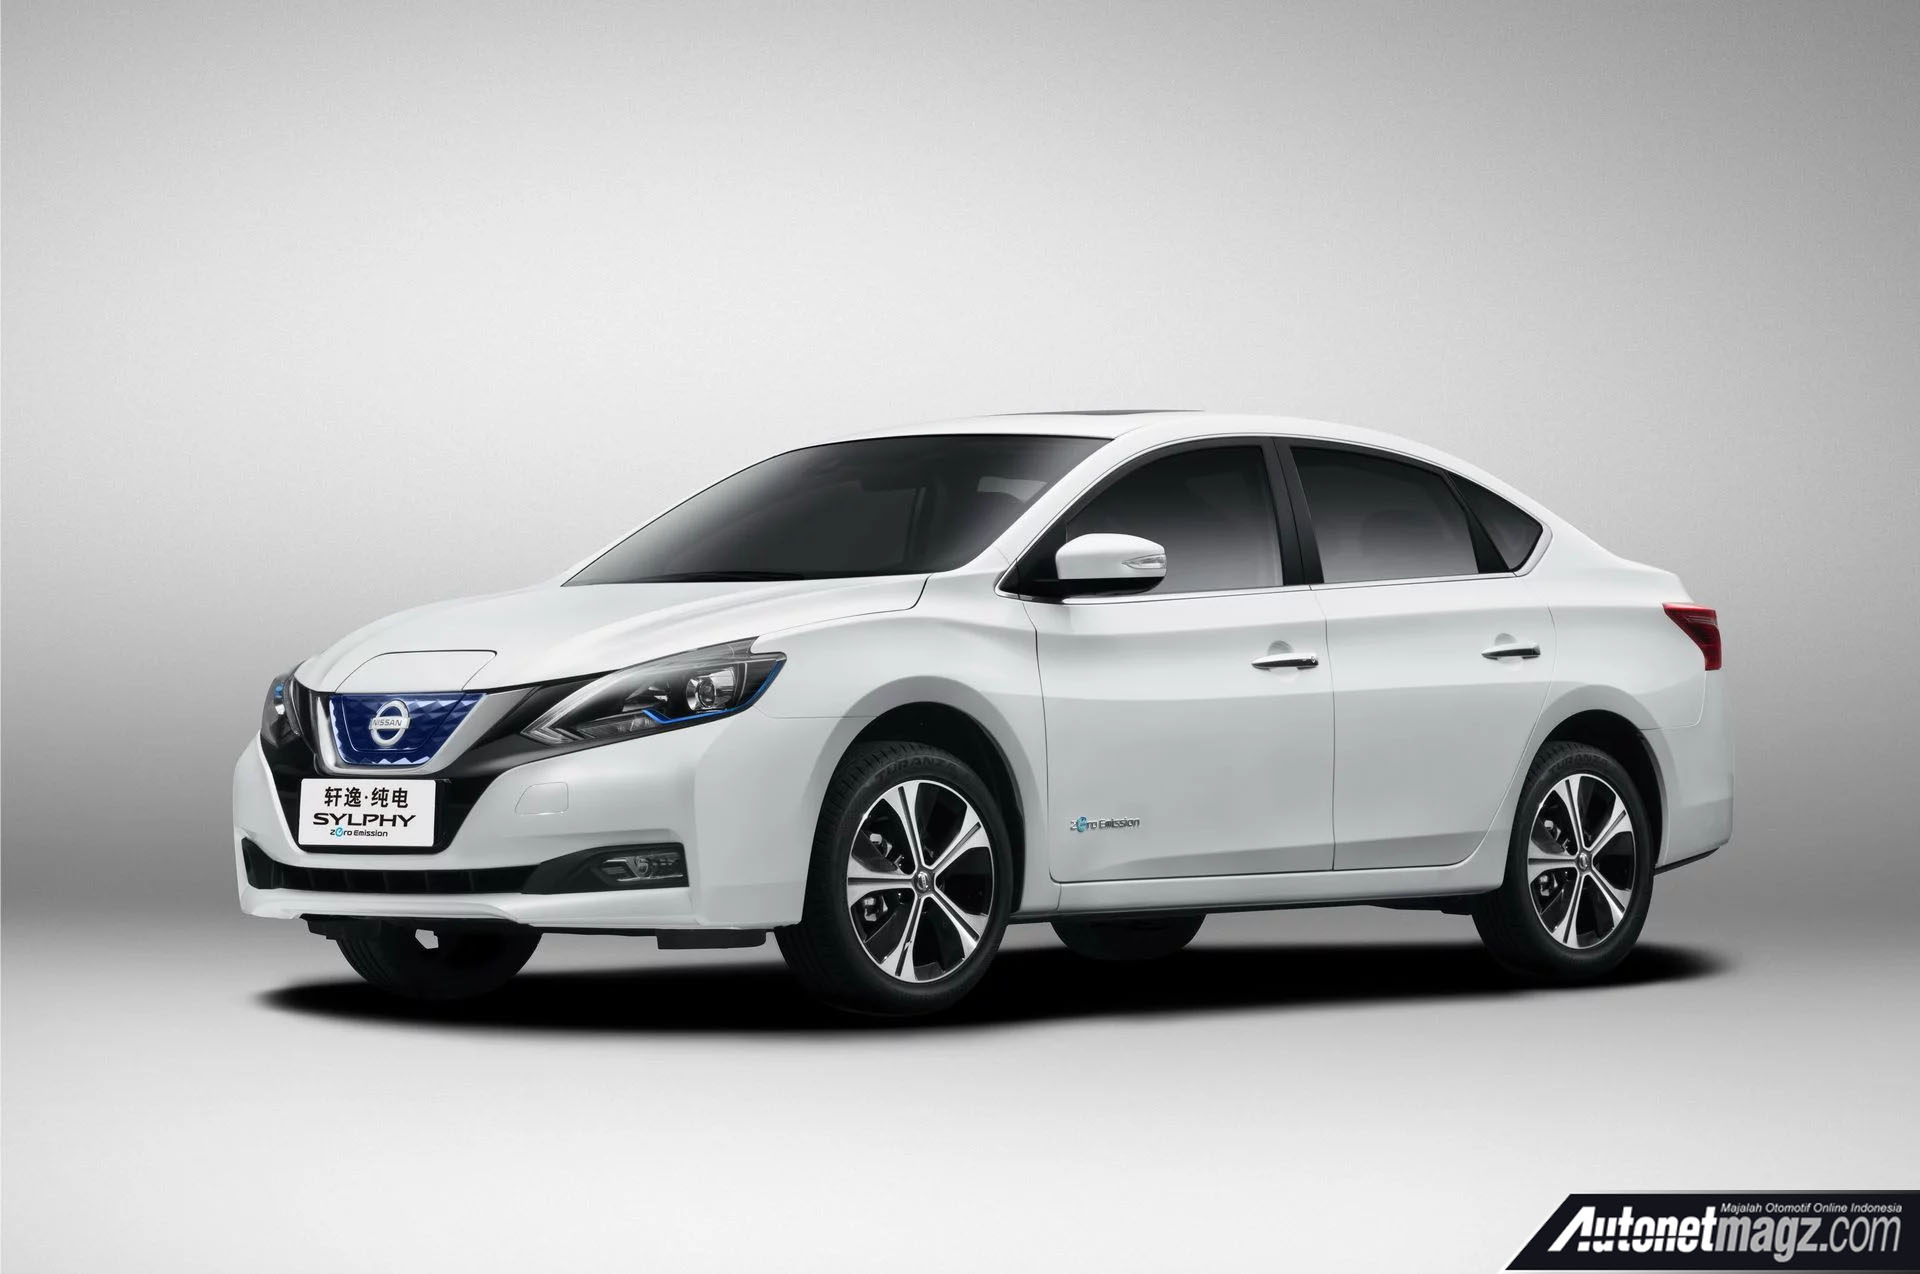 Berita, New Nissan Sylphy EV 2018 depan: New Nissan Sylphy EV Resmi Diluncurkan di China